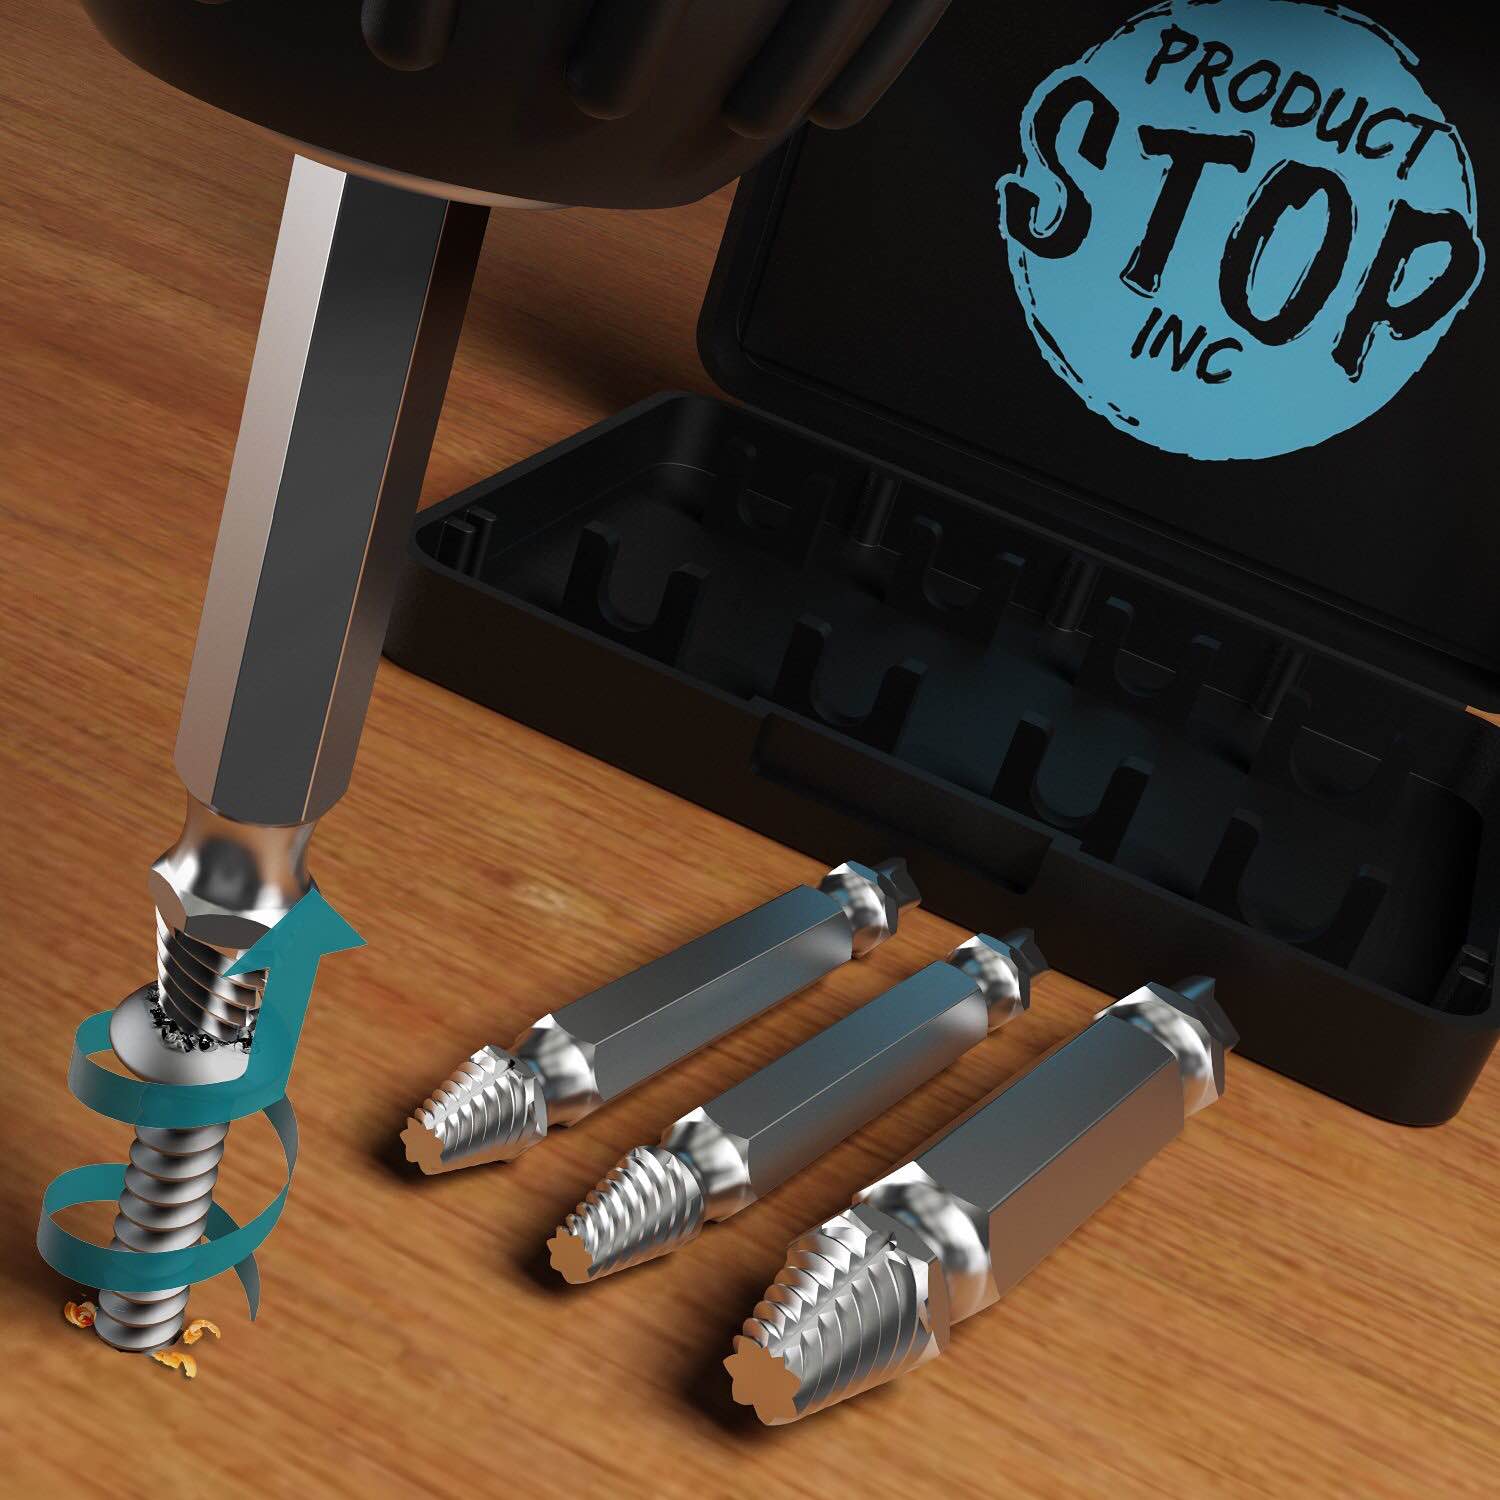 Product Stop's screw extractor set. ($17)